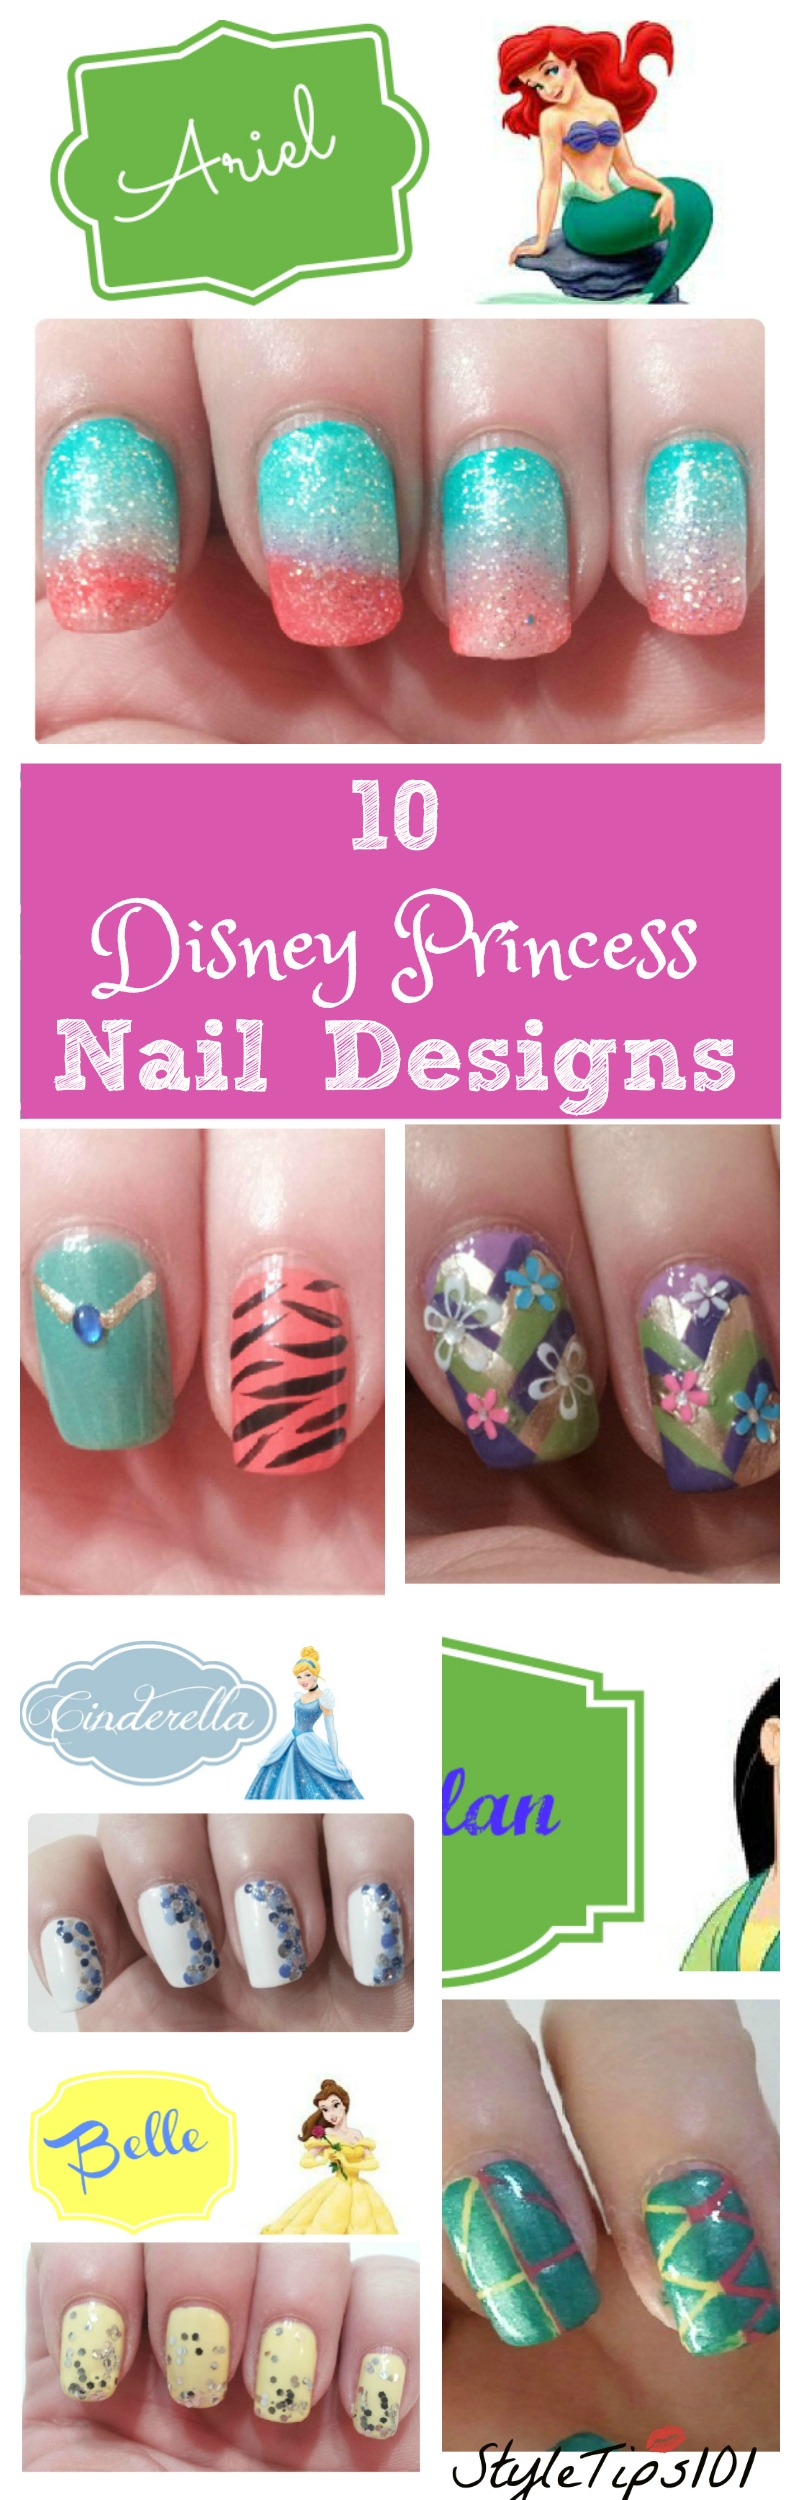 Disney Princess Nail Designs